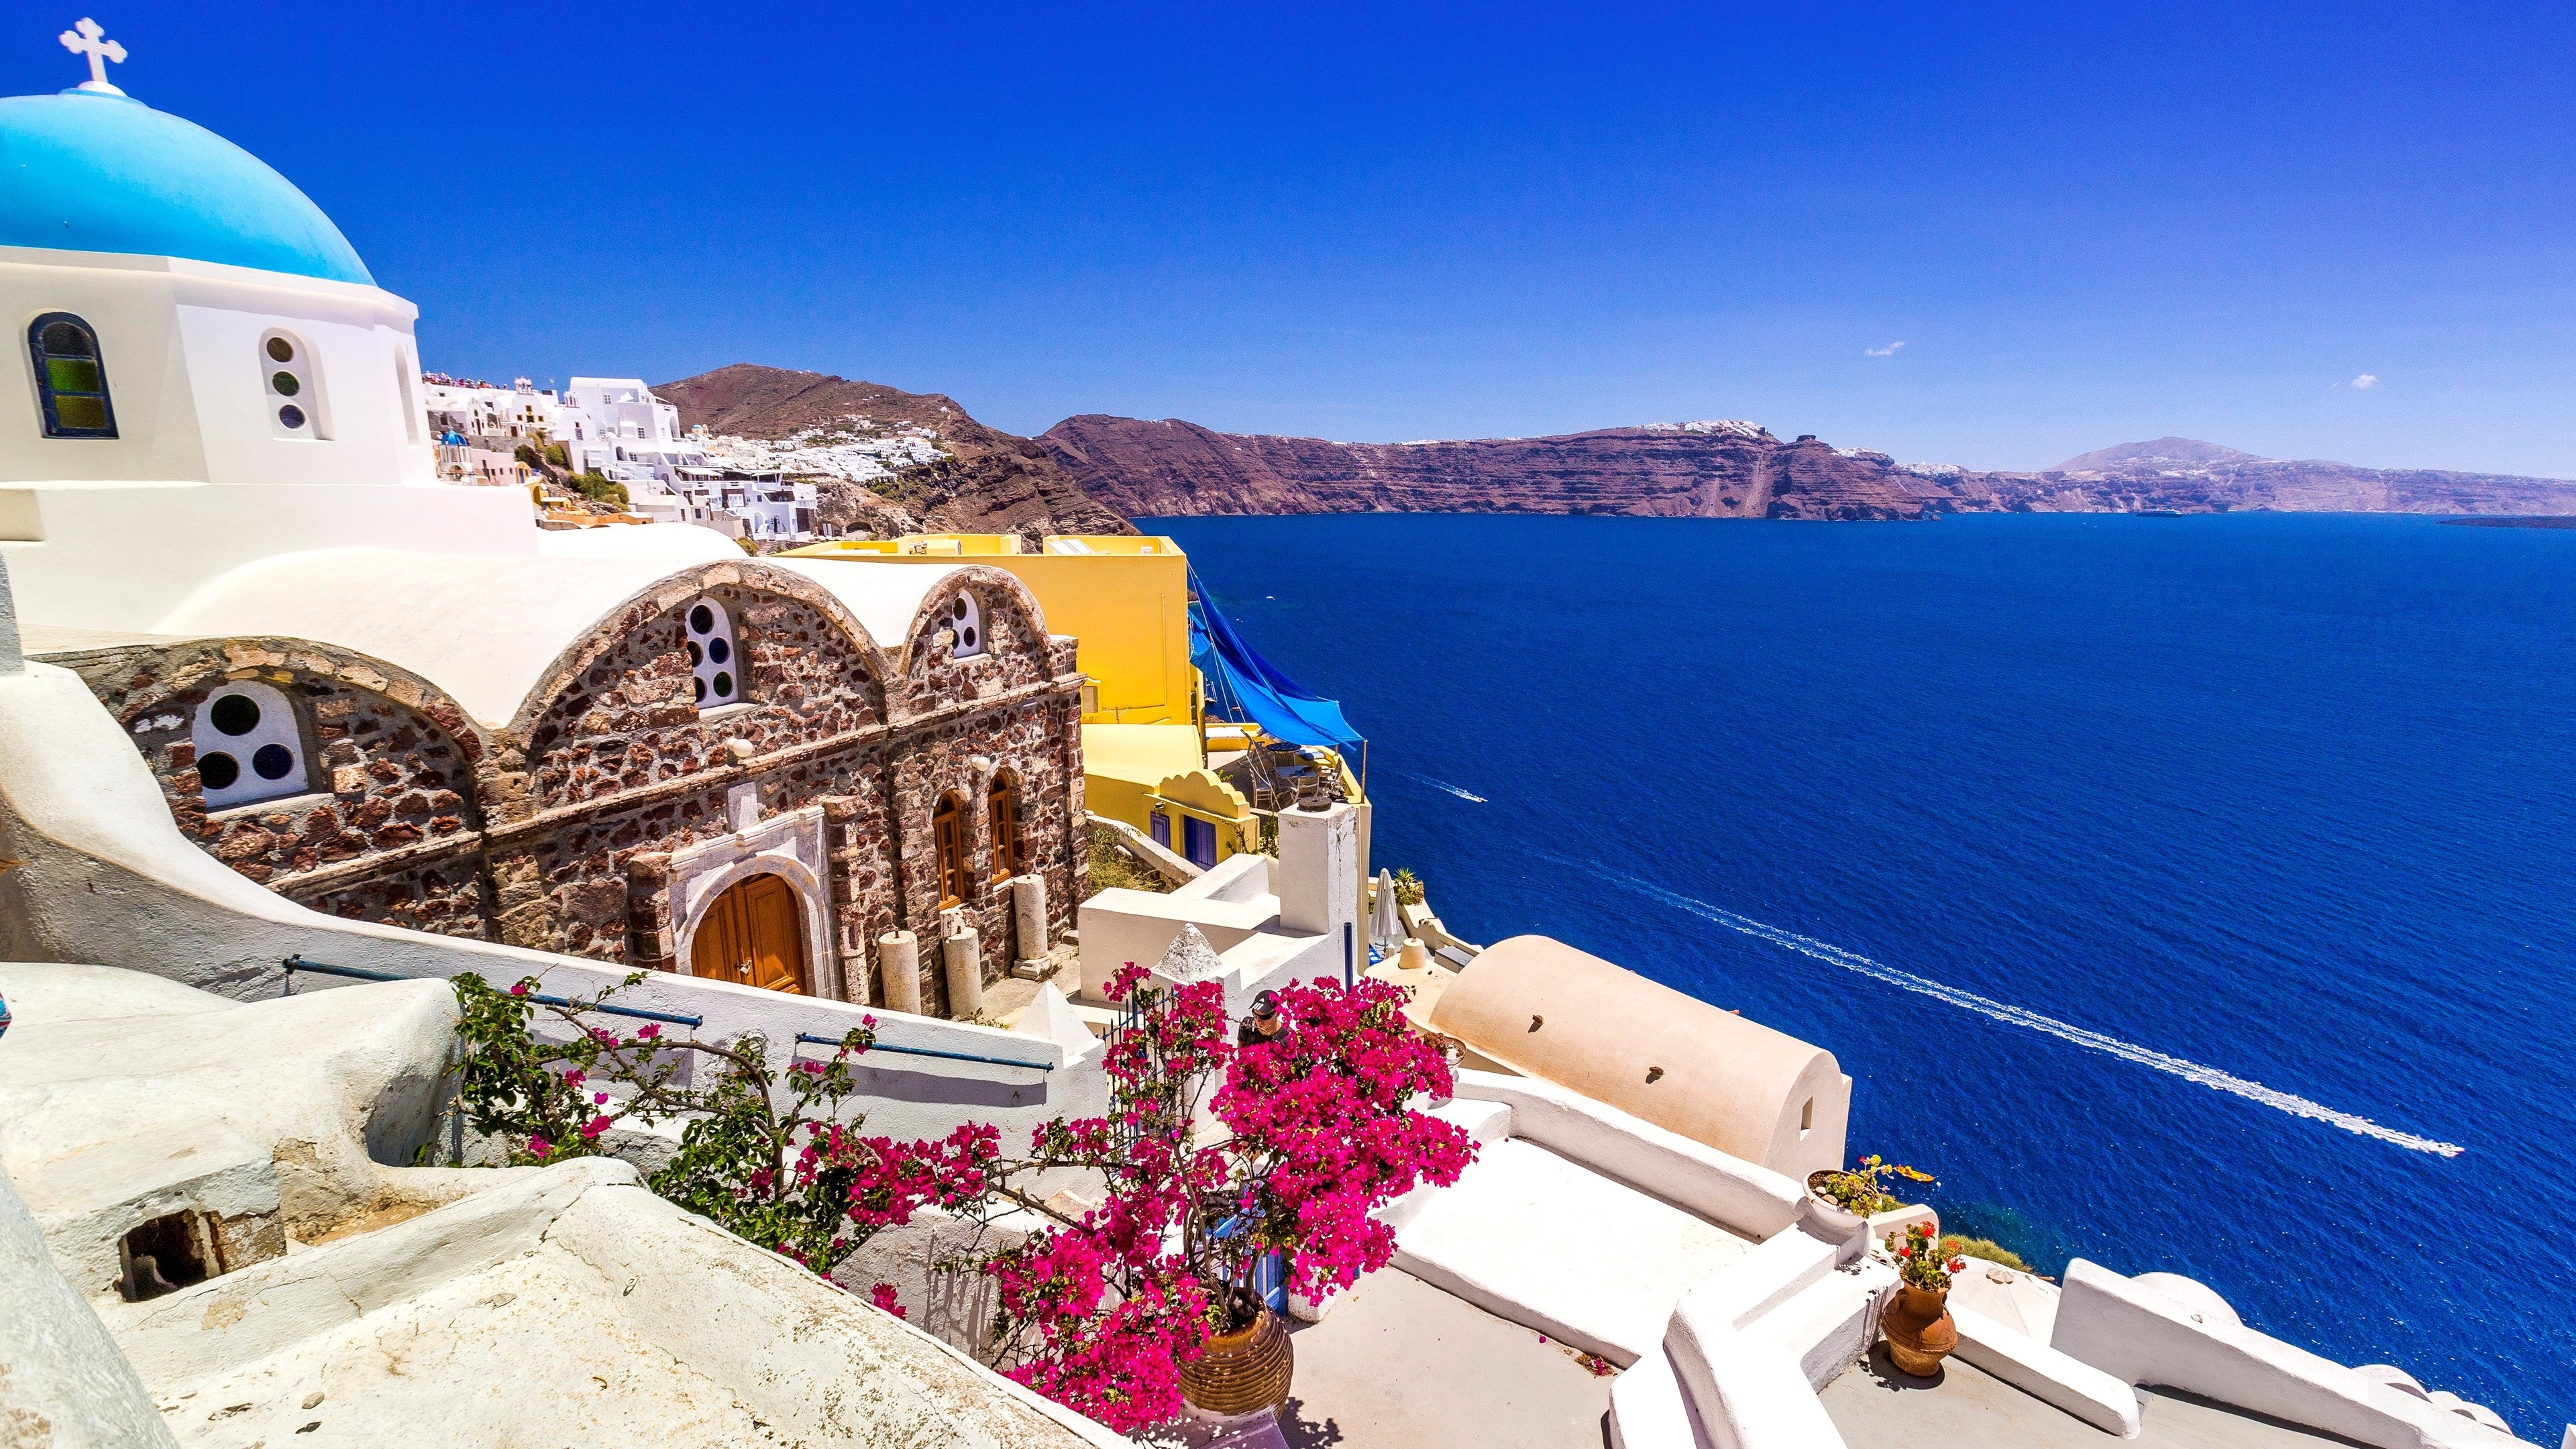 Greece's gem, Stunning wallpaper, House in Santorini, High-definition image, 3840x2160 4K Desktop